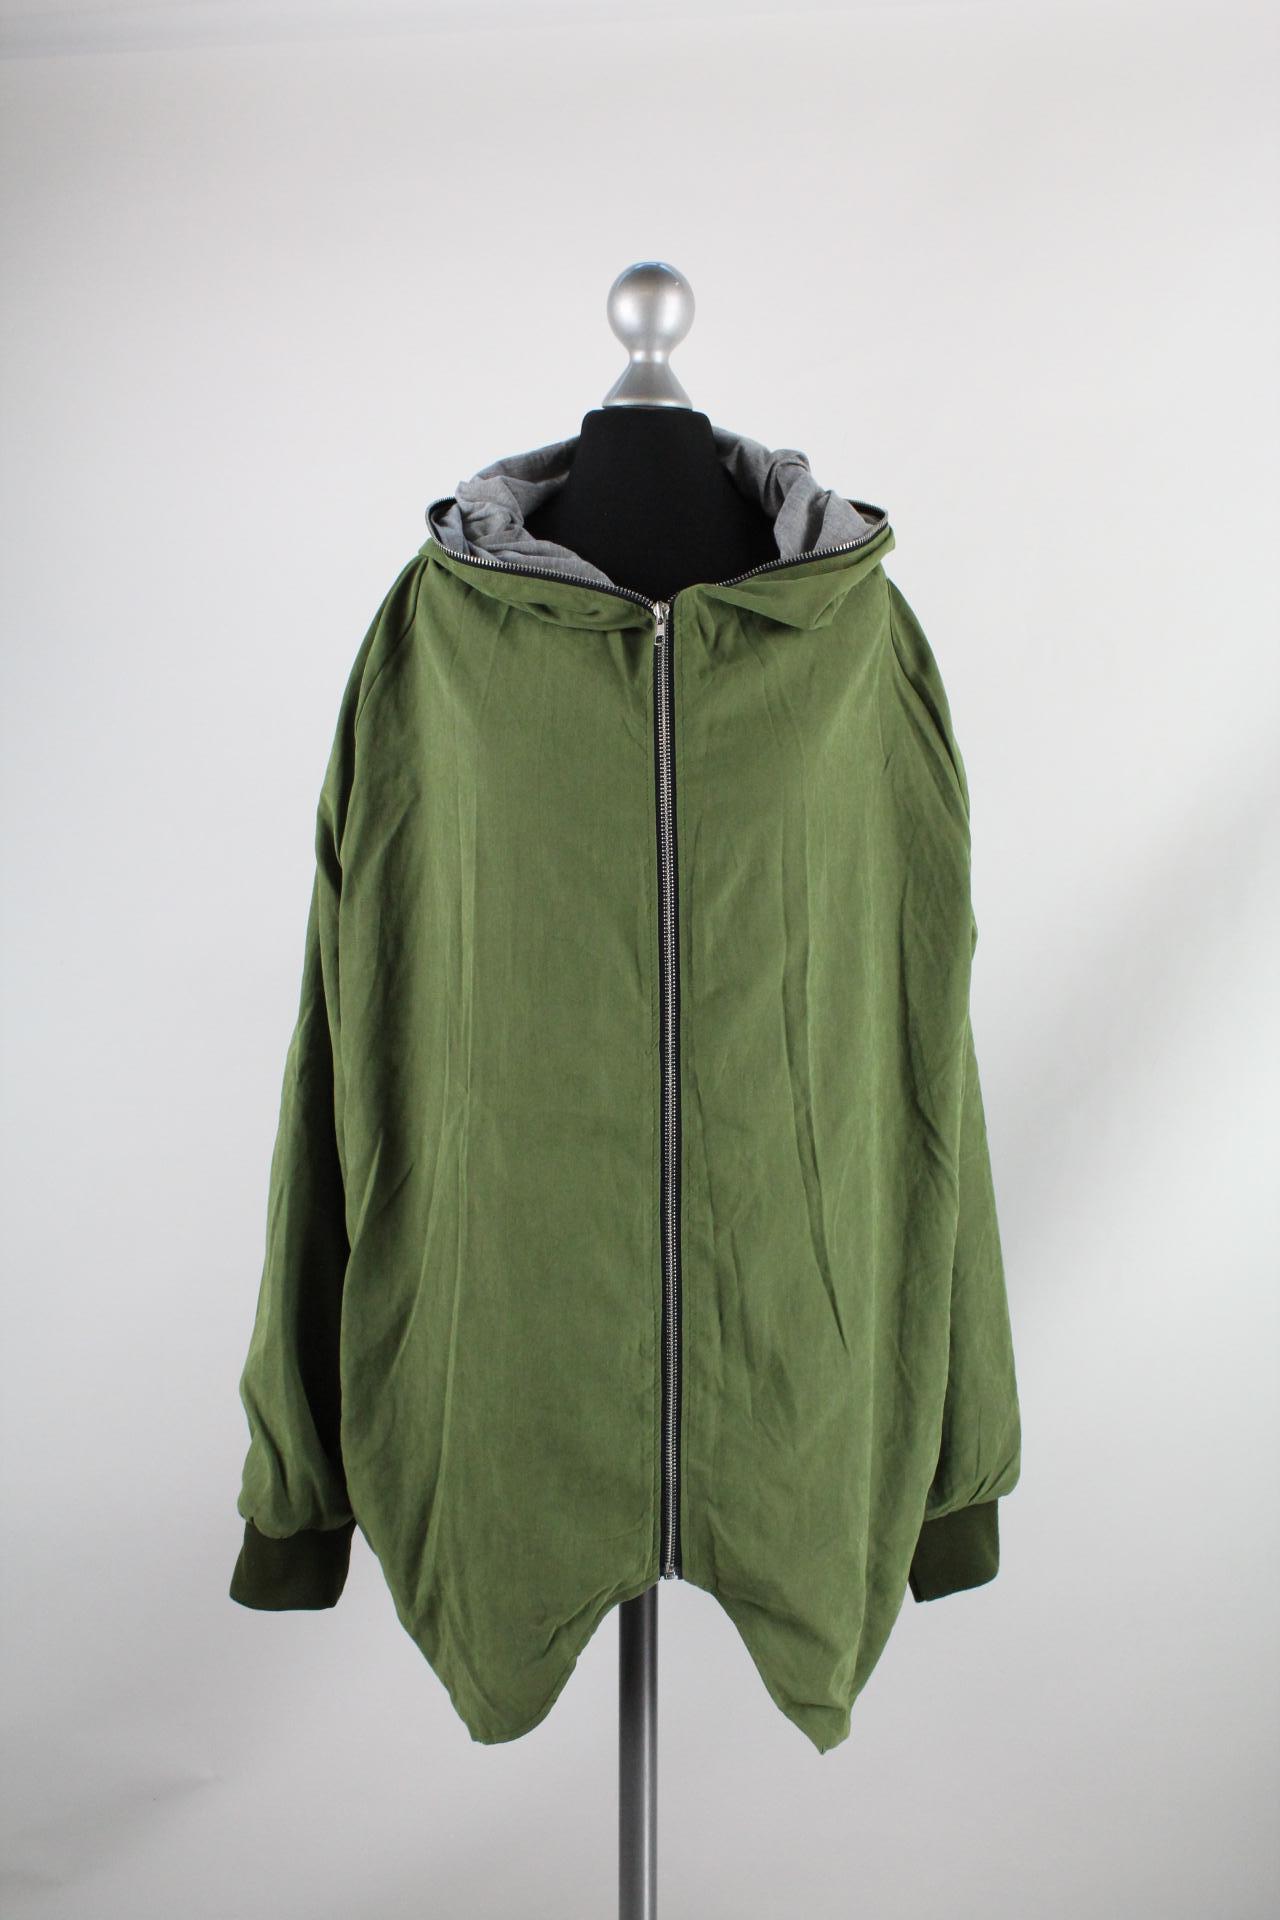 Lesara Damen-Jacke grün Größe XL